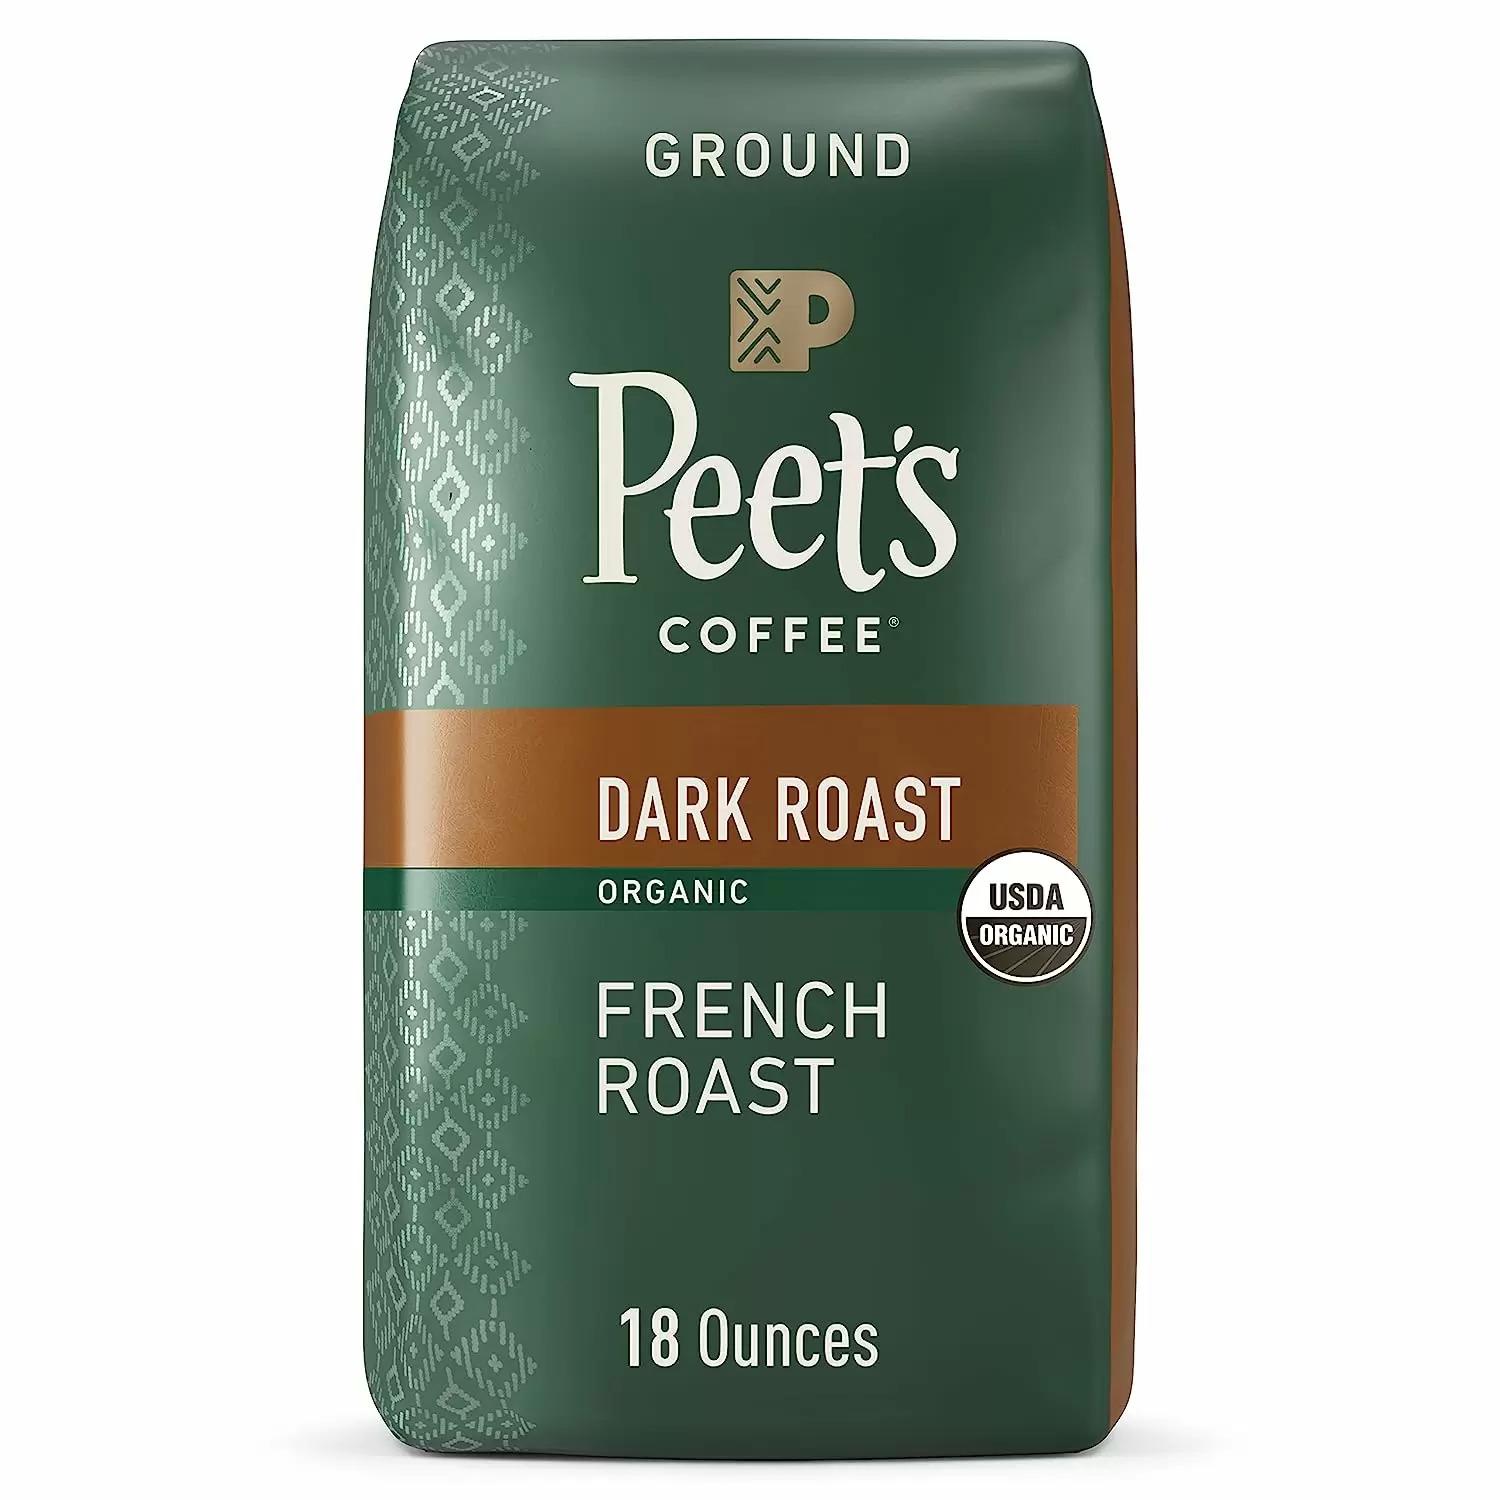 Peets Coffee French Roast Dark Roast Ground Coffee for $6.93